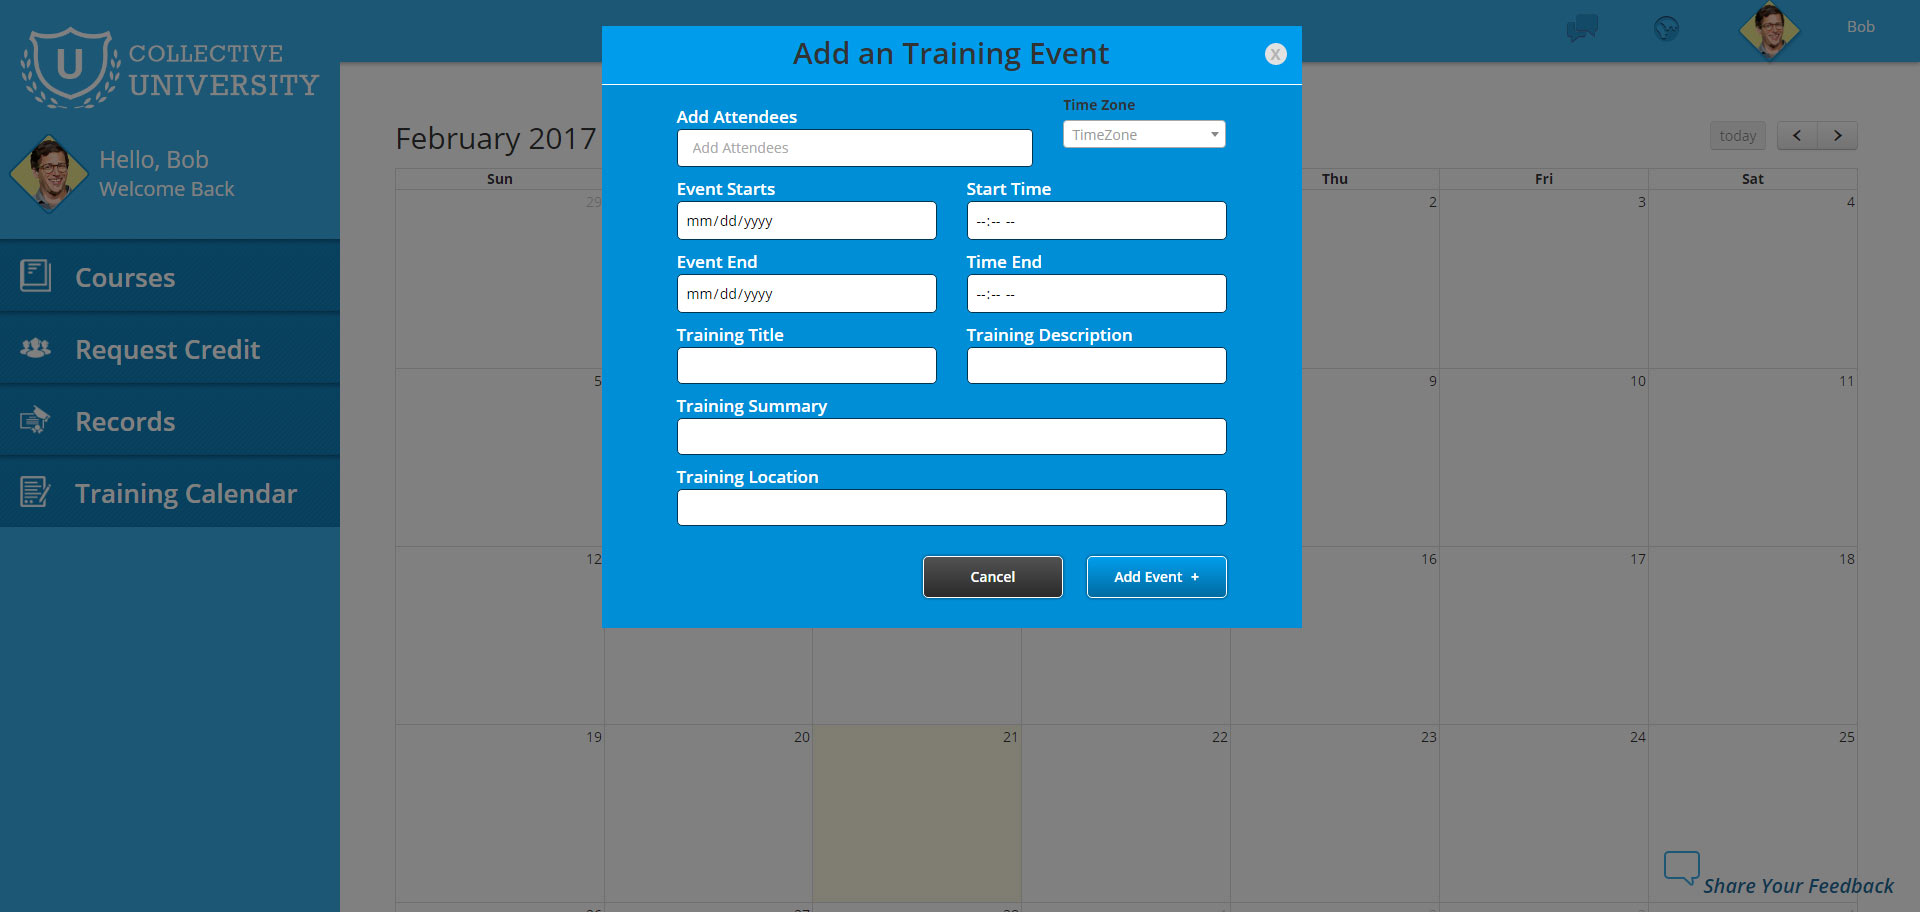 Add training events